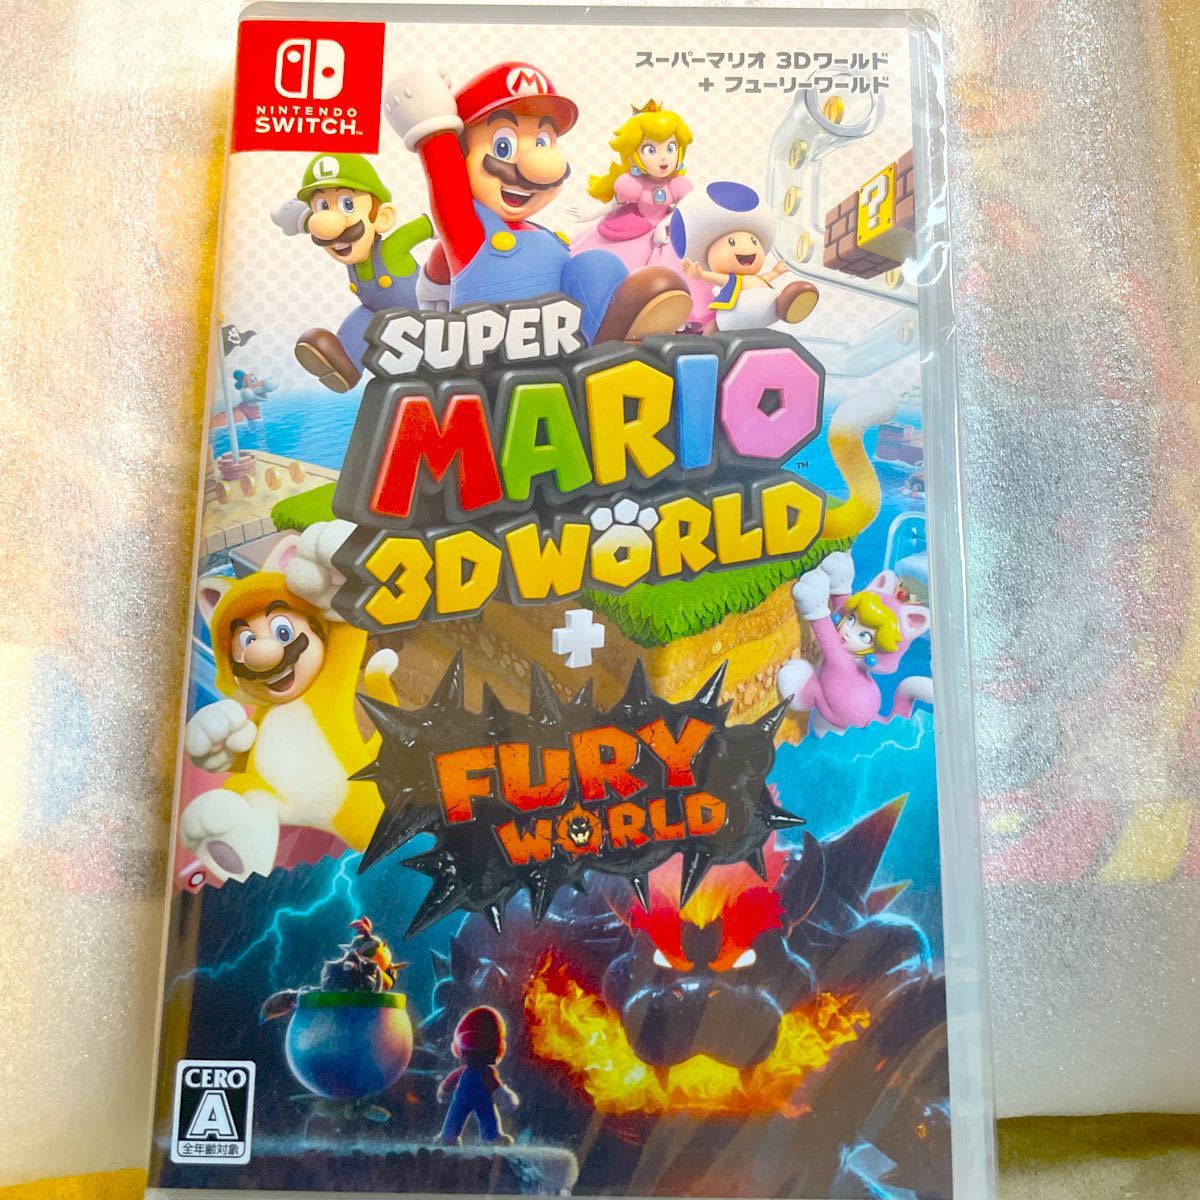 Nintendo Switch スーパーマリオ3D world FURY world